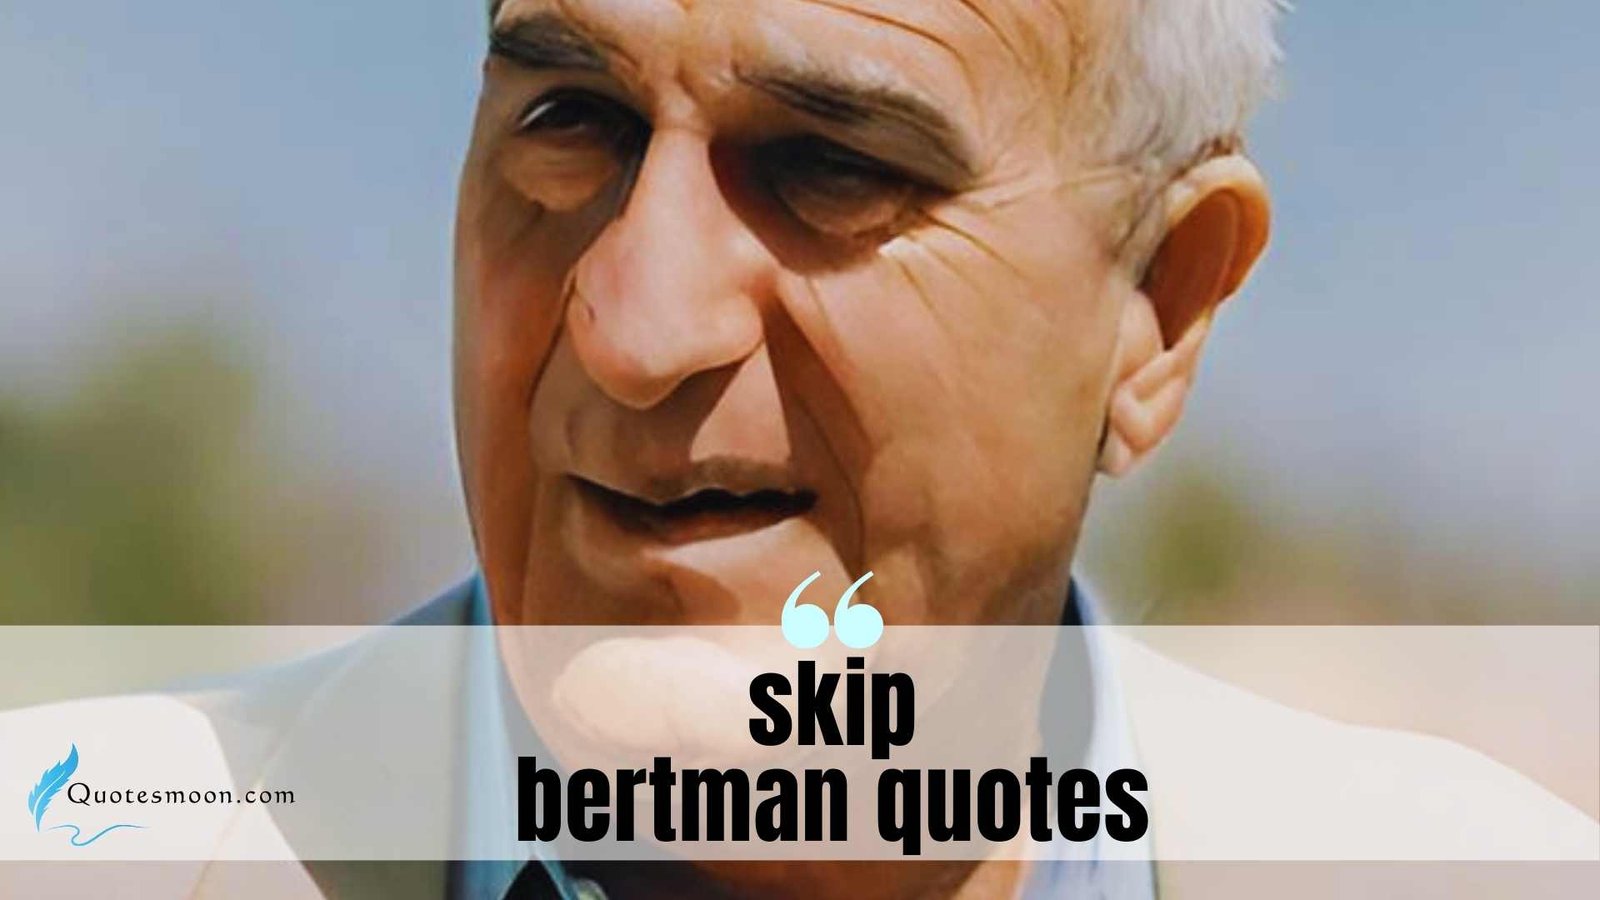 skip bertman quotes images